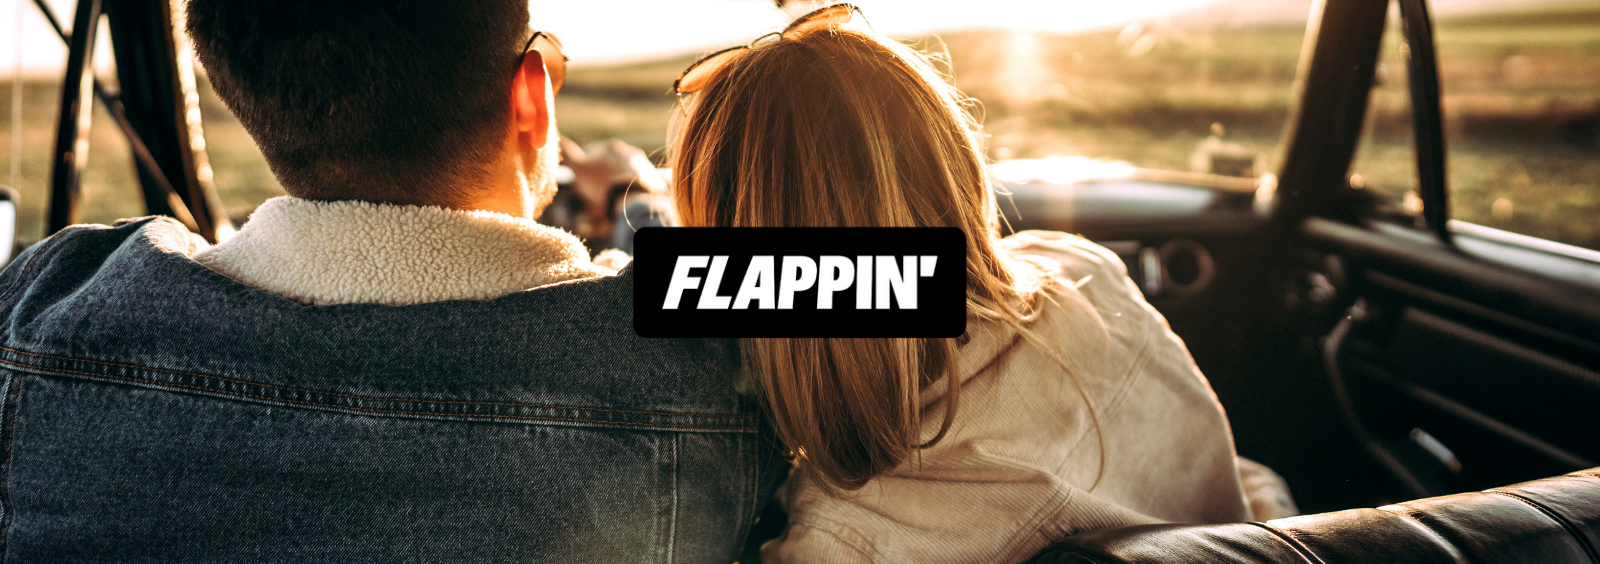 FLAPPIN' logo